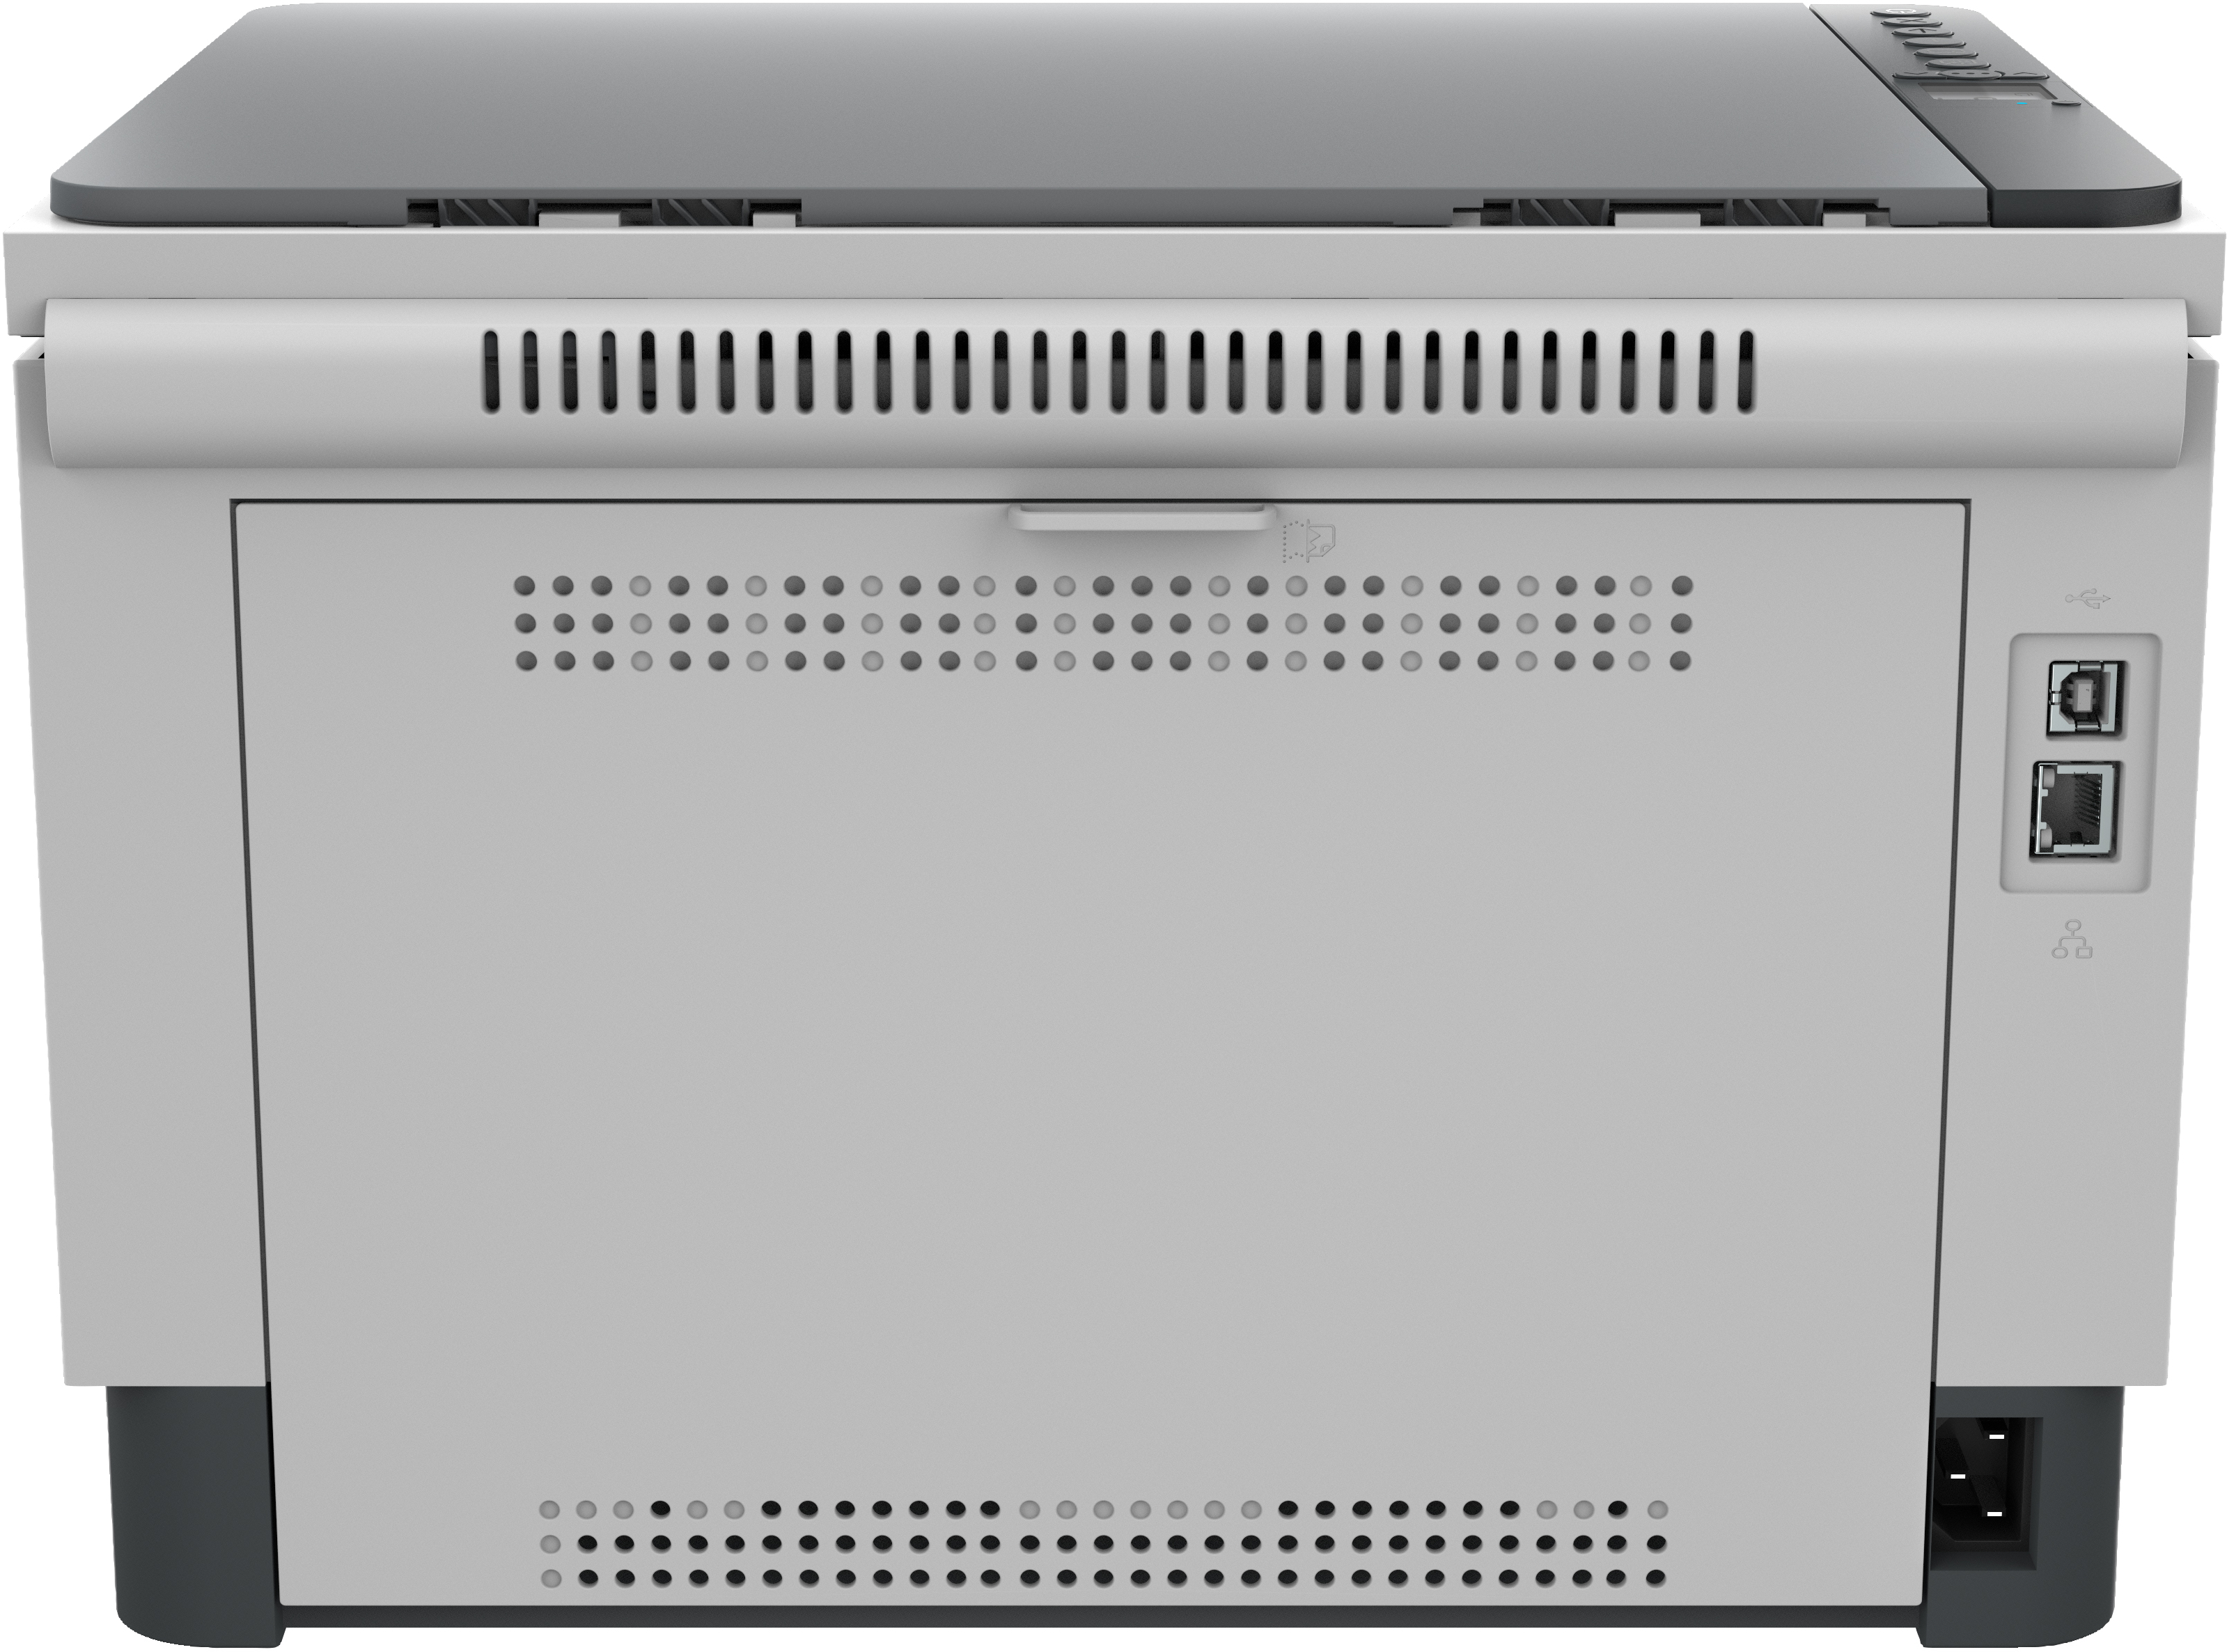 Netzwerkfähig Drucker Laser HP WLAN TANK MFP 2604DW